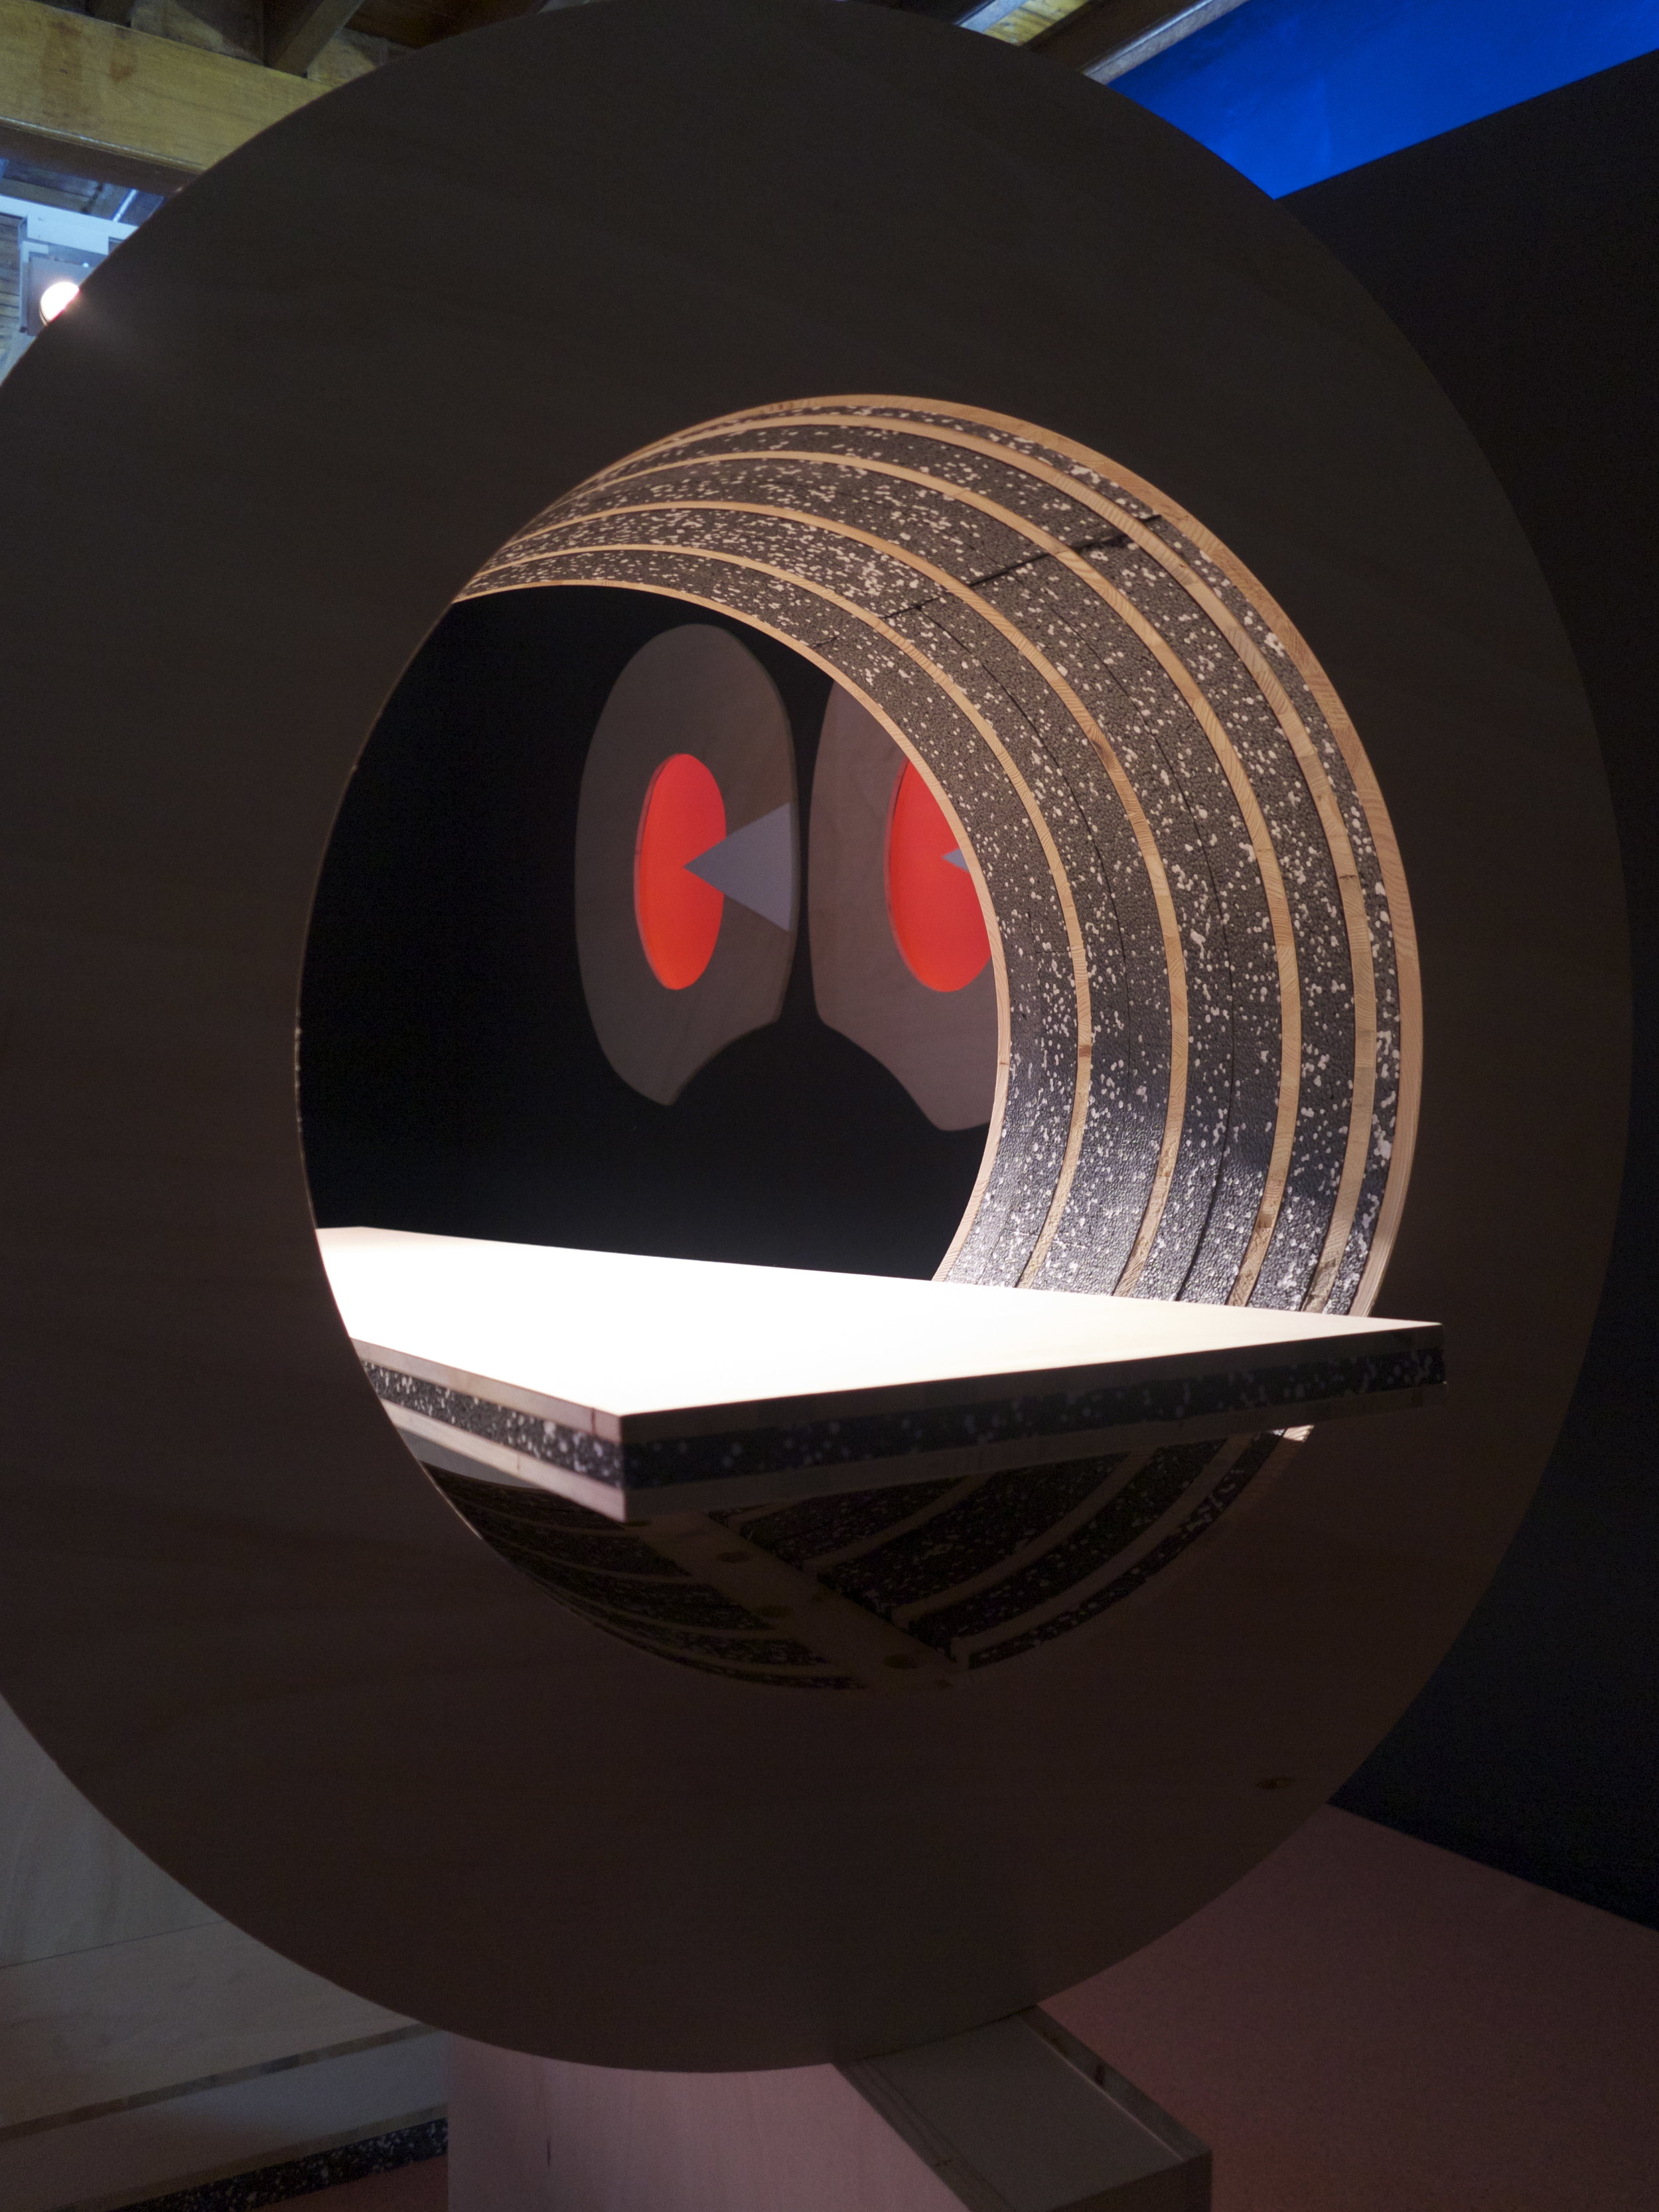  Antedoom installation view from Sharjah Biennial 13, 2017 